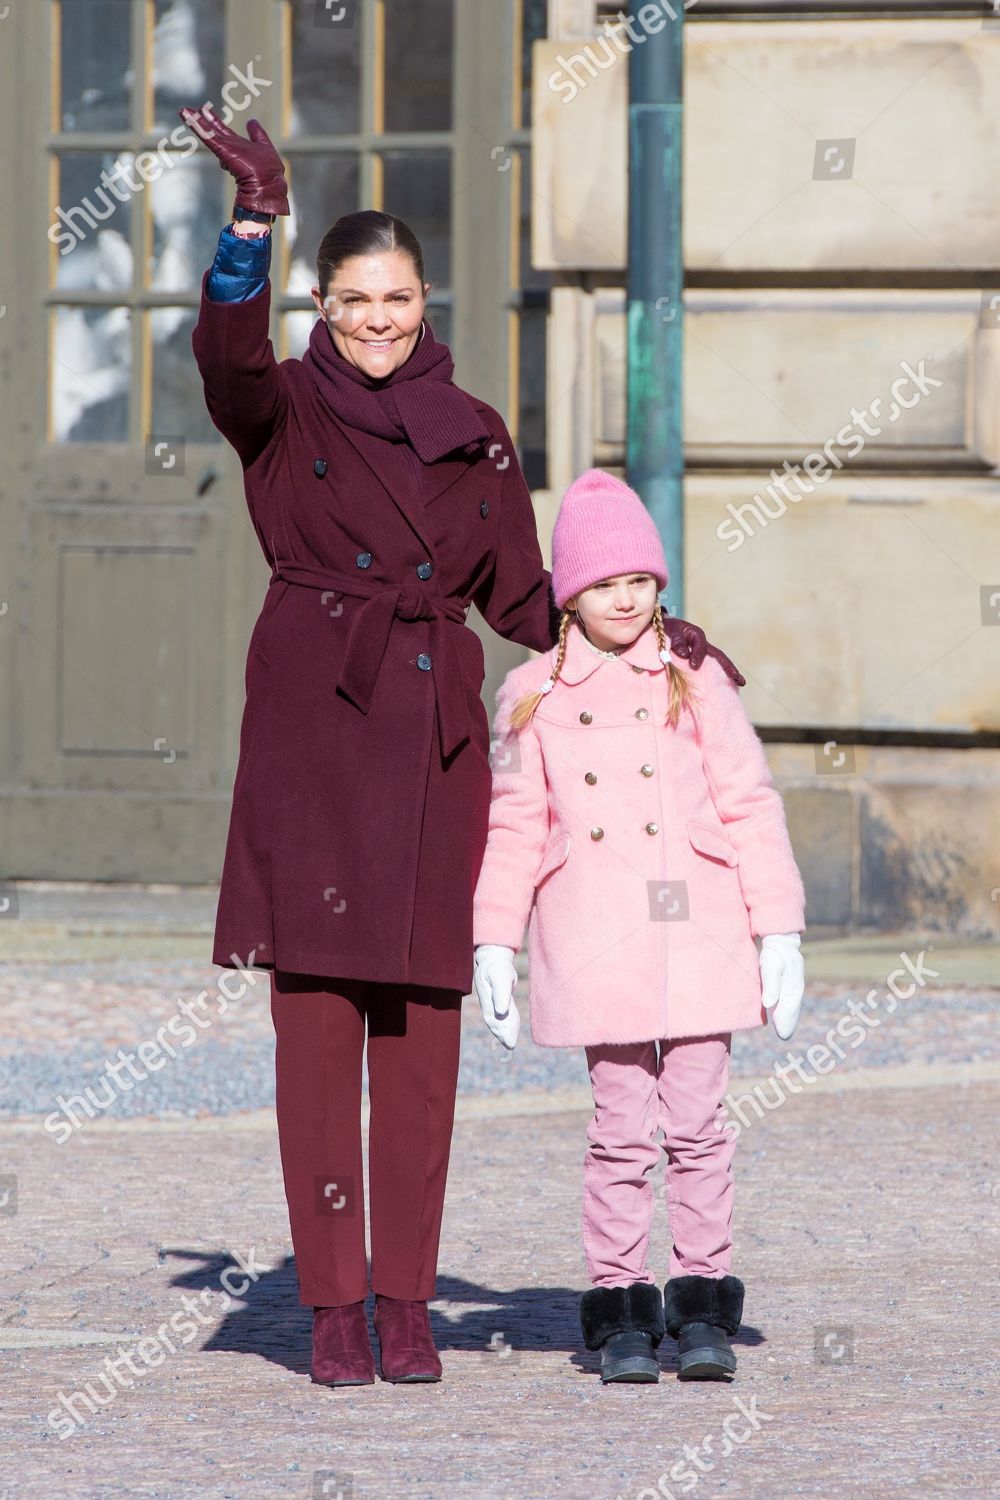 crown-princess-victoria-name-day-celebrations-stockholm-sweden-shutterstock-editorial-10151935bp.jpg